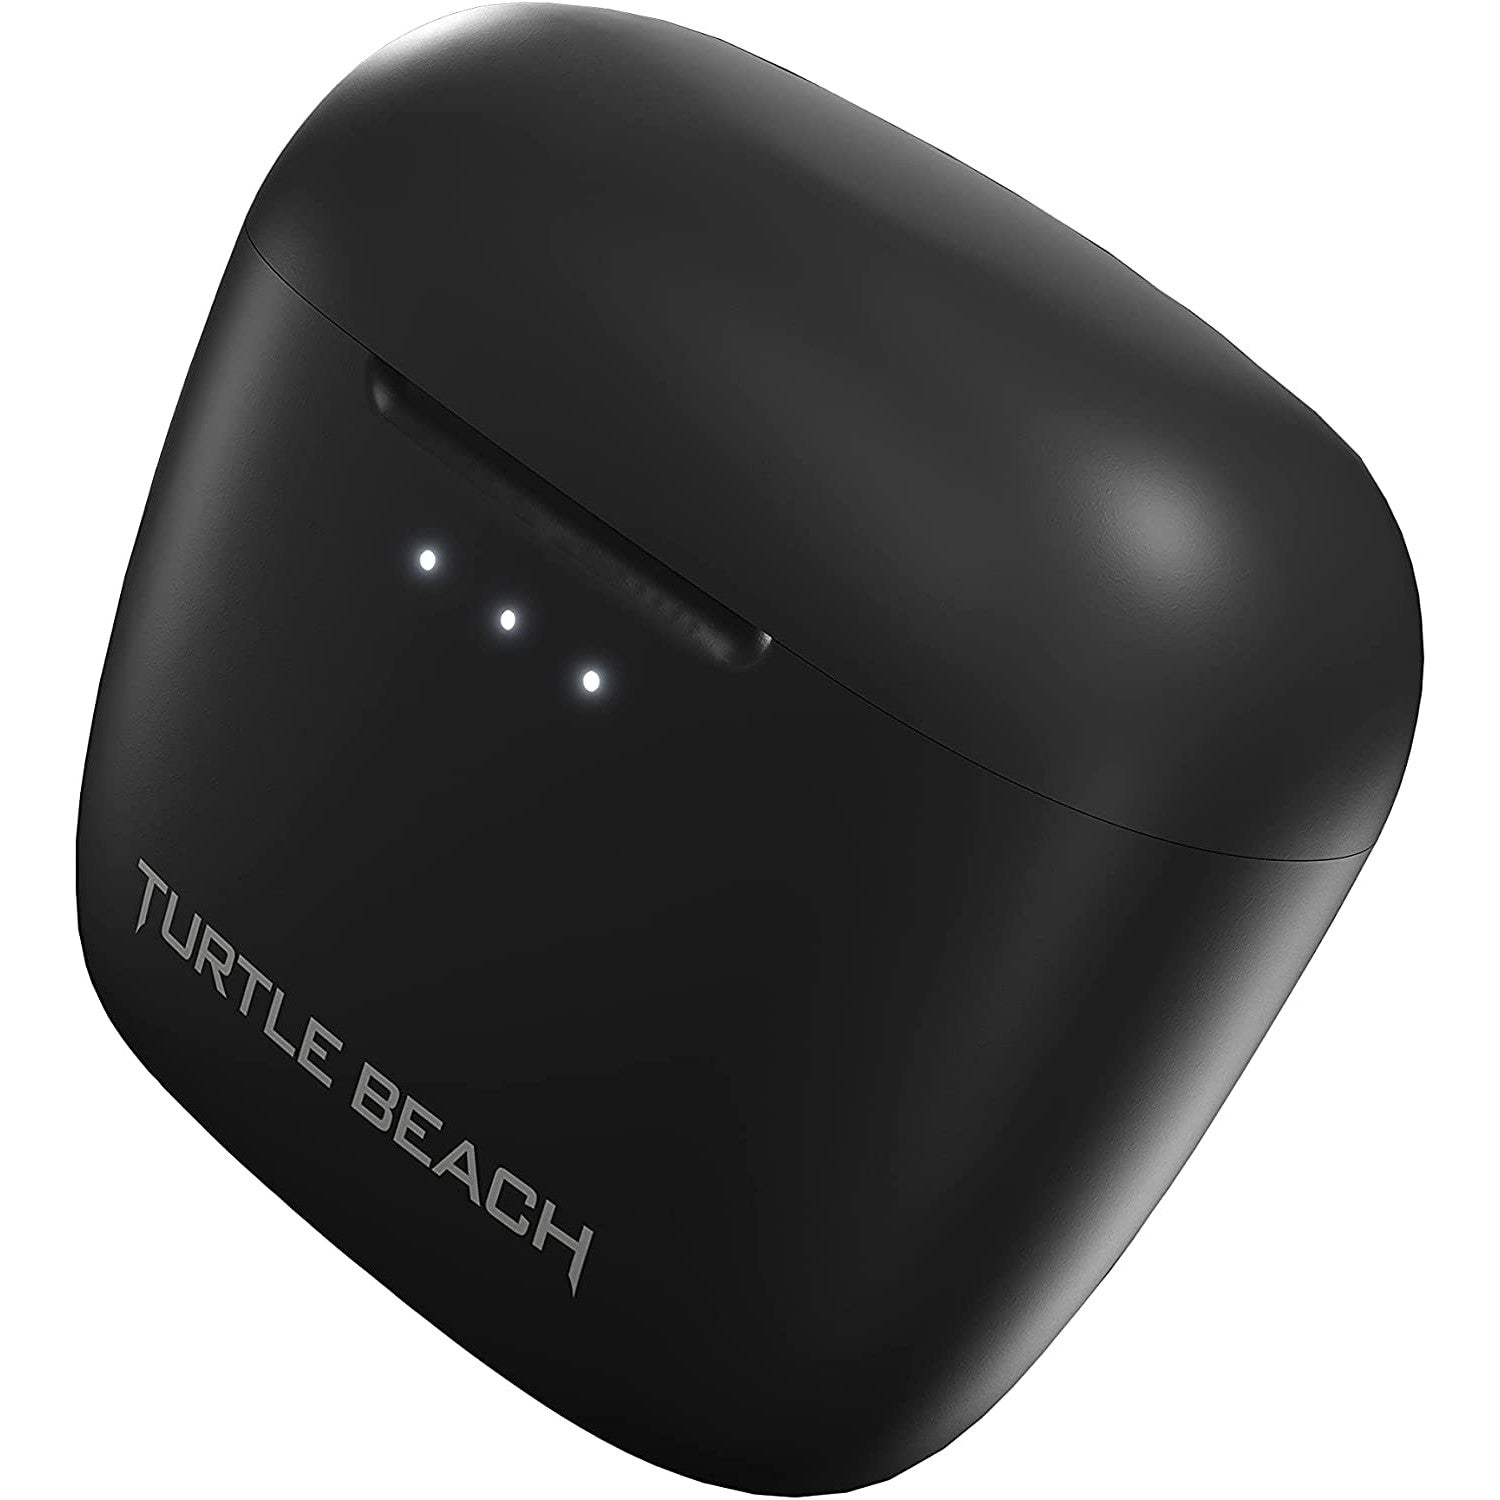 Turtle Beach Scout Air True Wireless Earbuds - Black - Refurbished Pristine